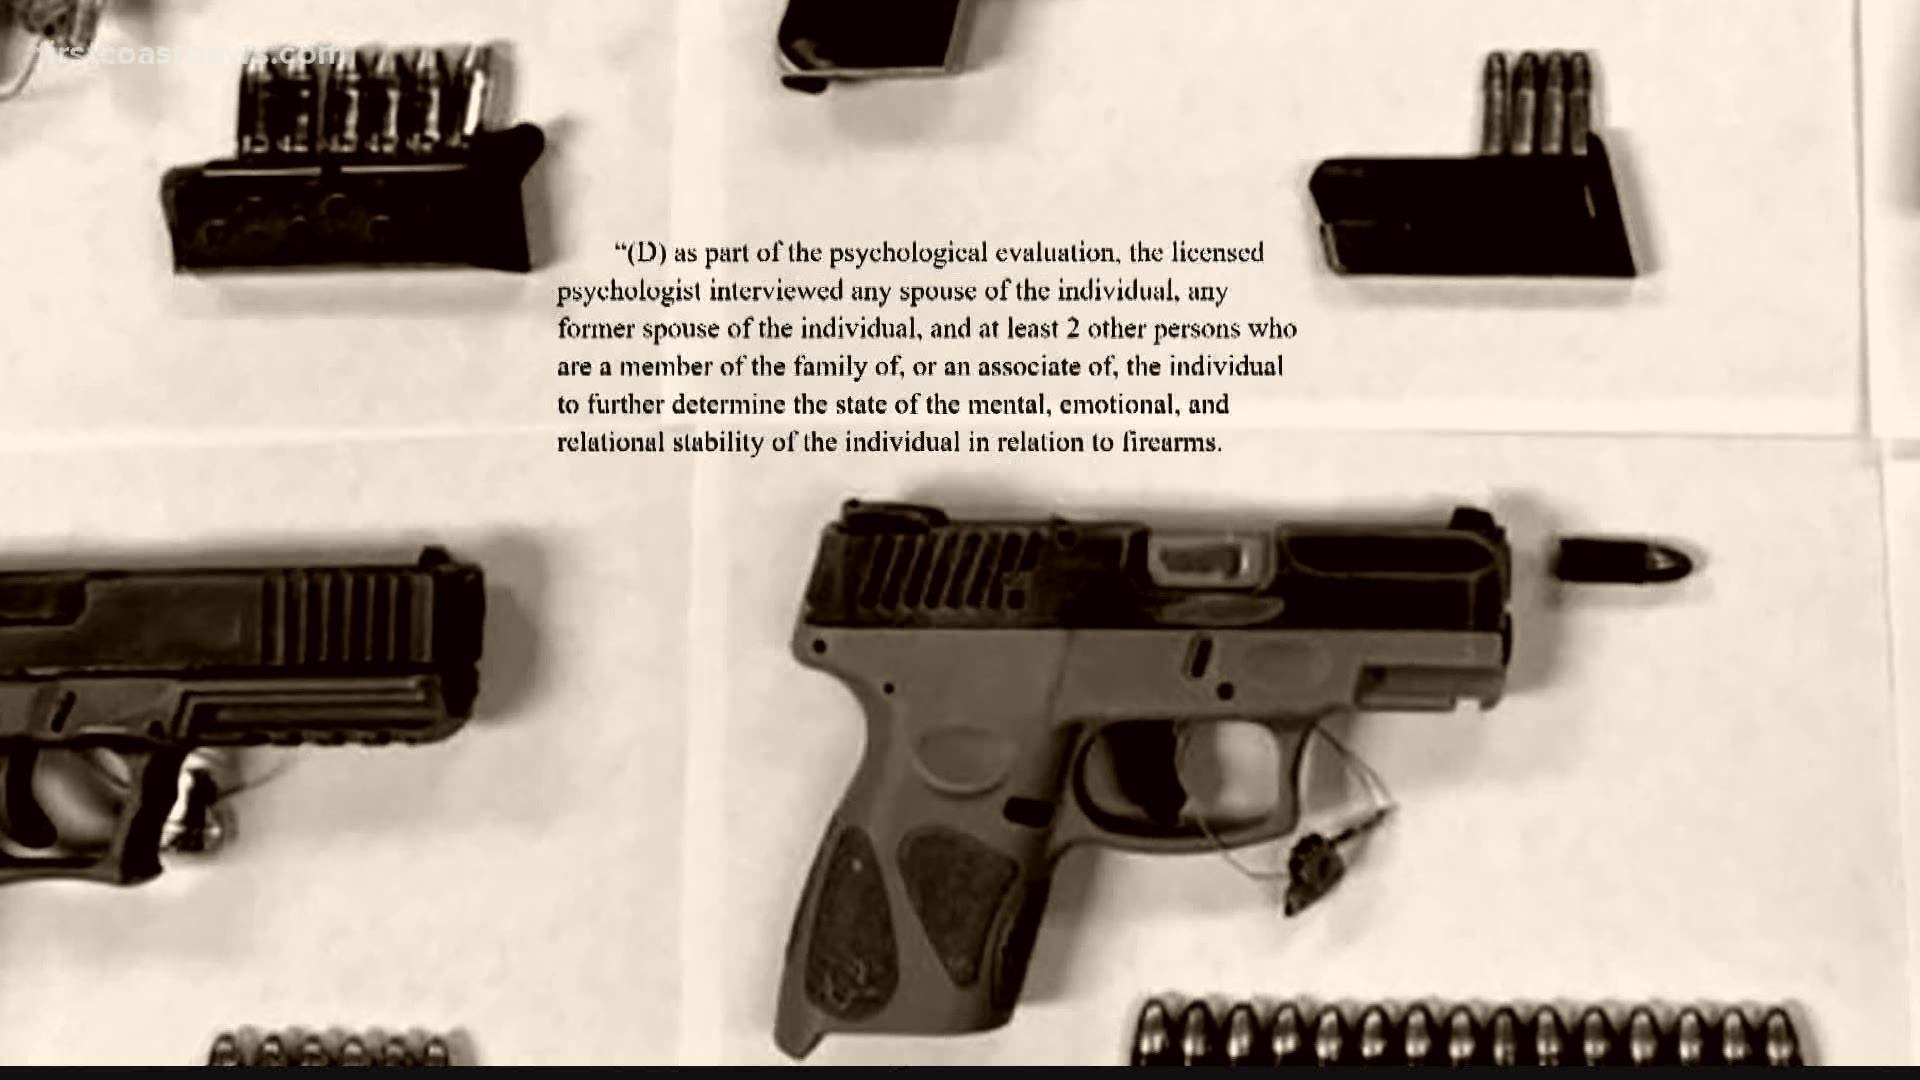 A long shot or not? New gun bill draws hot debate over controversial text